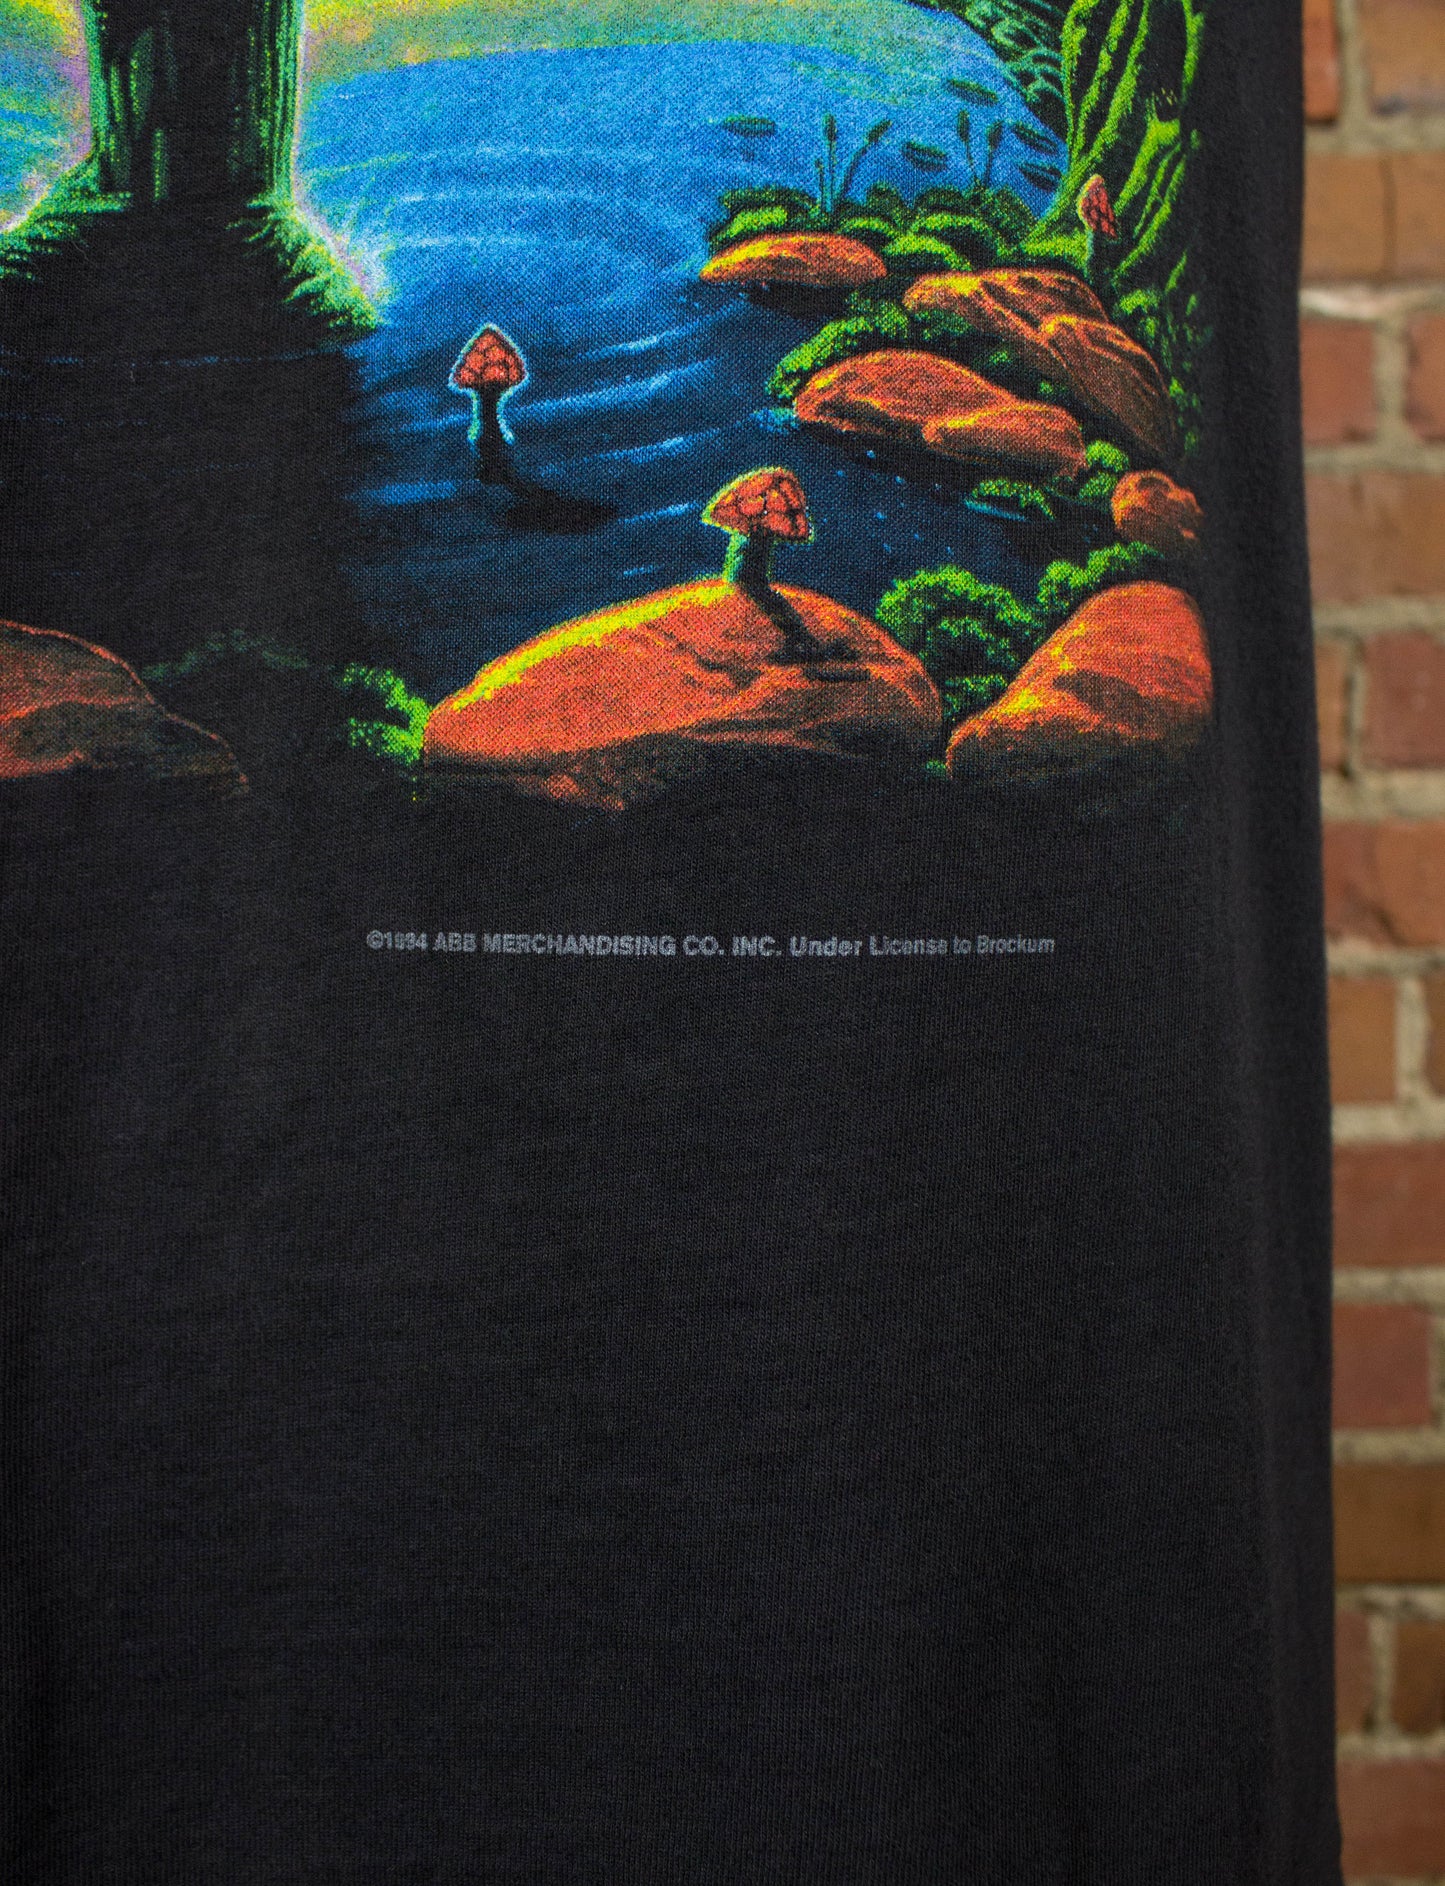 The Allman Brothers Band 1994 Where It All Begins Mushroom Black Concert T Shirt Unisex Medium